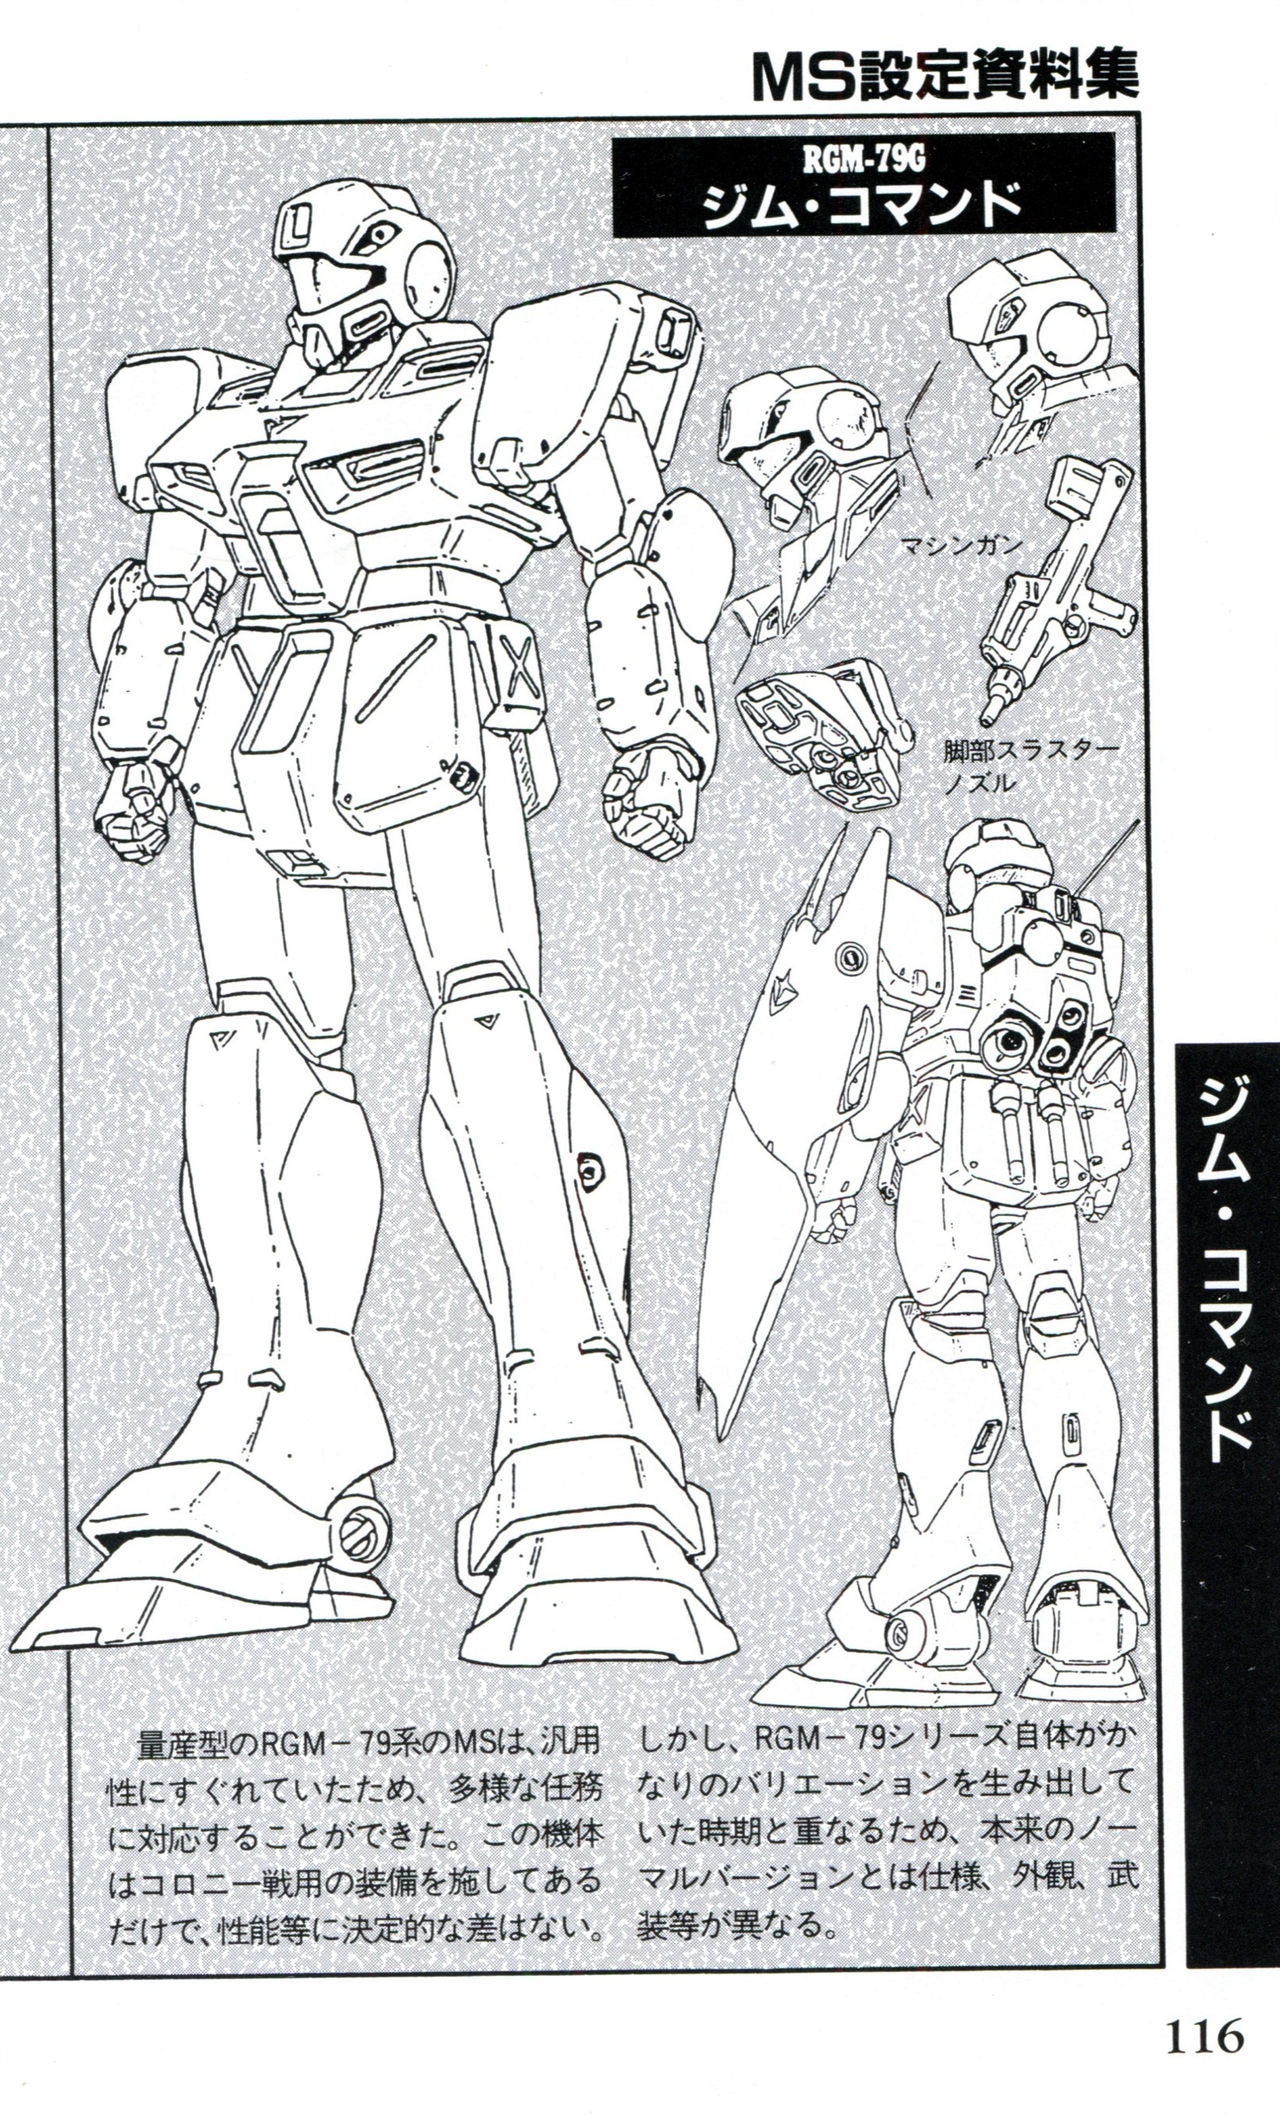 Mobile Suit Gundam U.C. Box MS Gundam Encyclopedia NO.01 - Mobile Suit Gundam 115